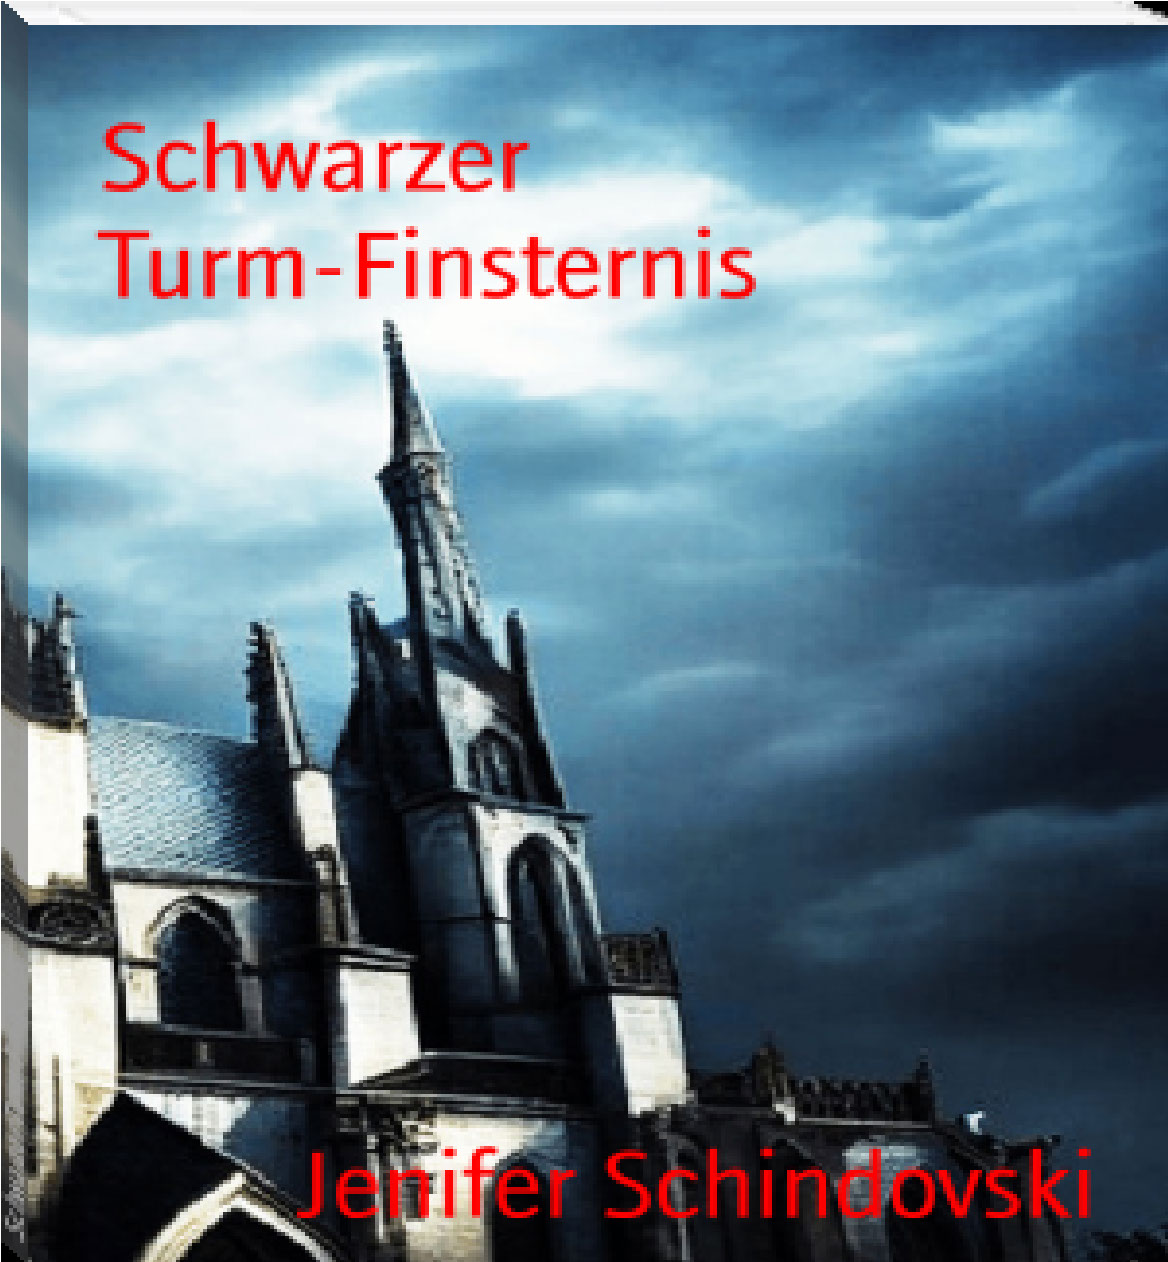 Schwarzer Turm-Finsternis rendition image